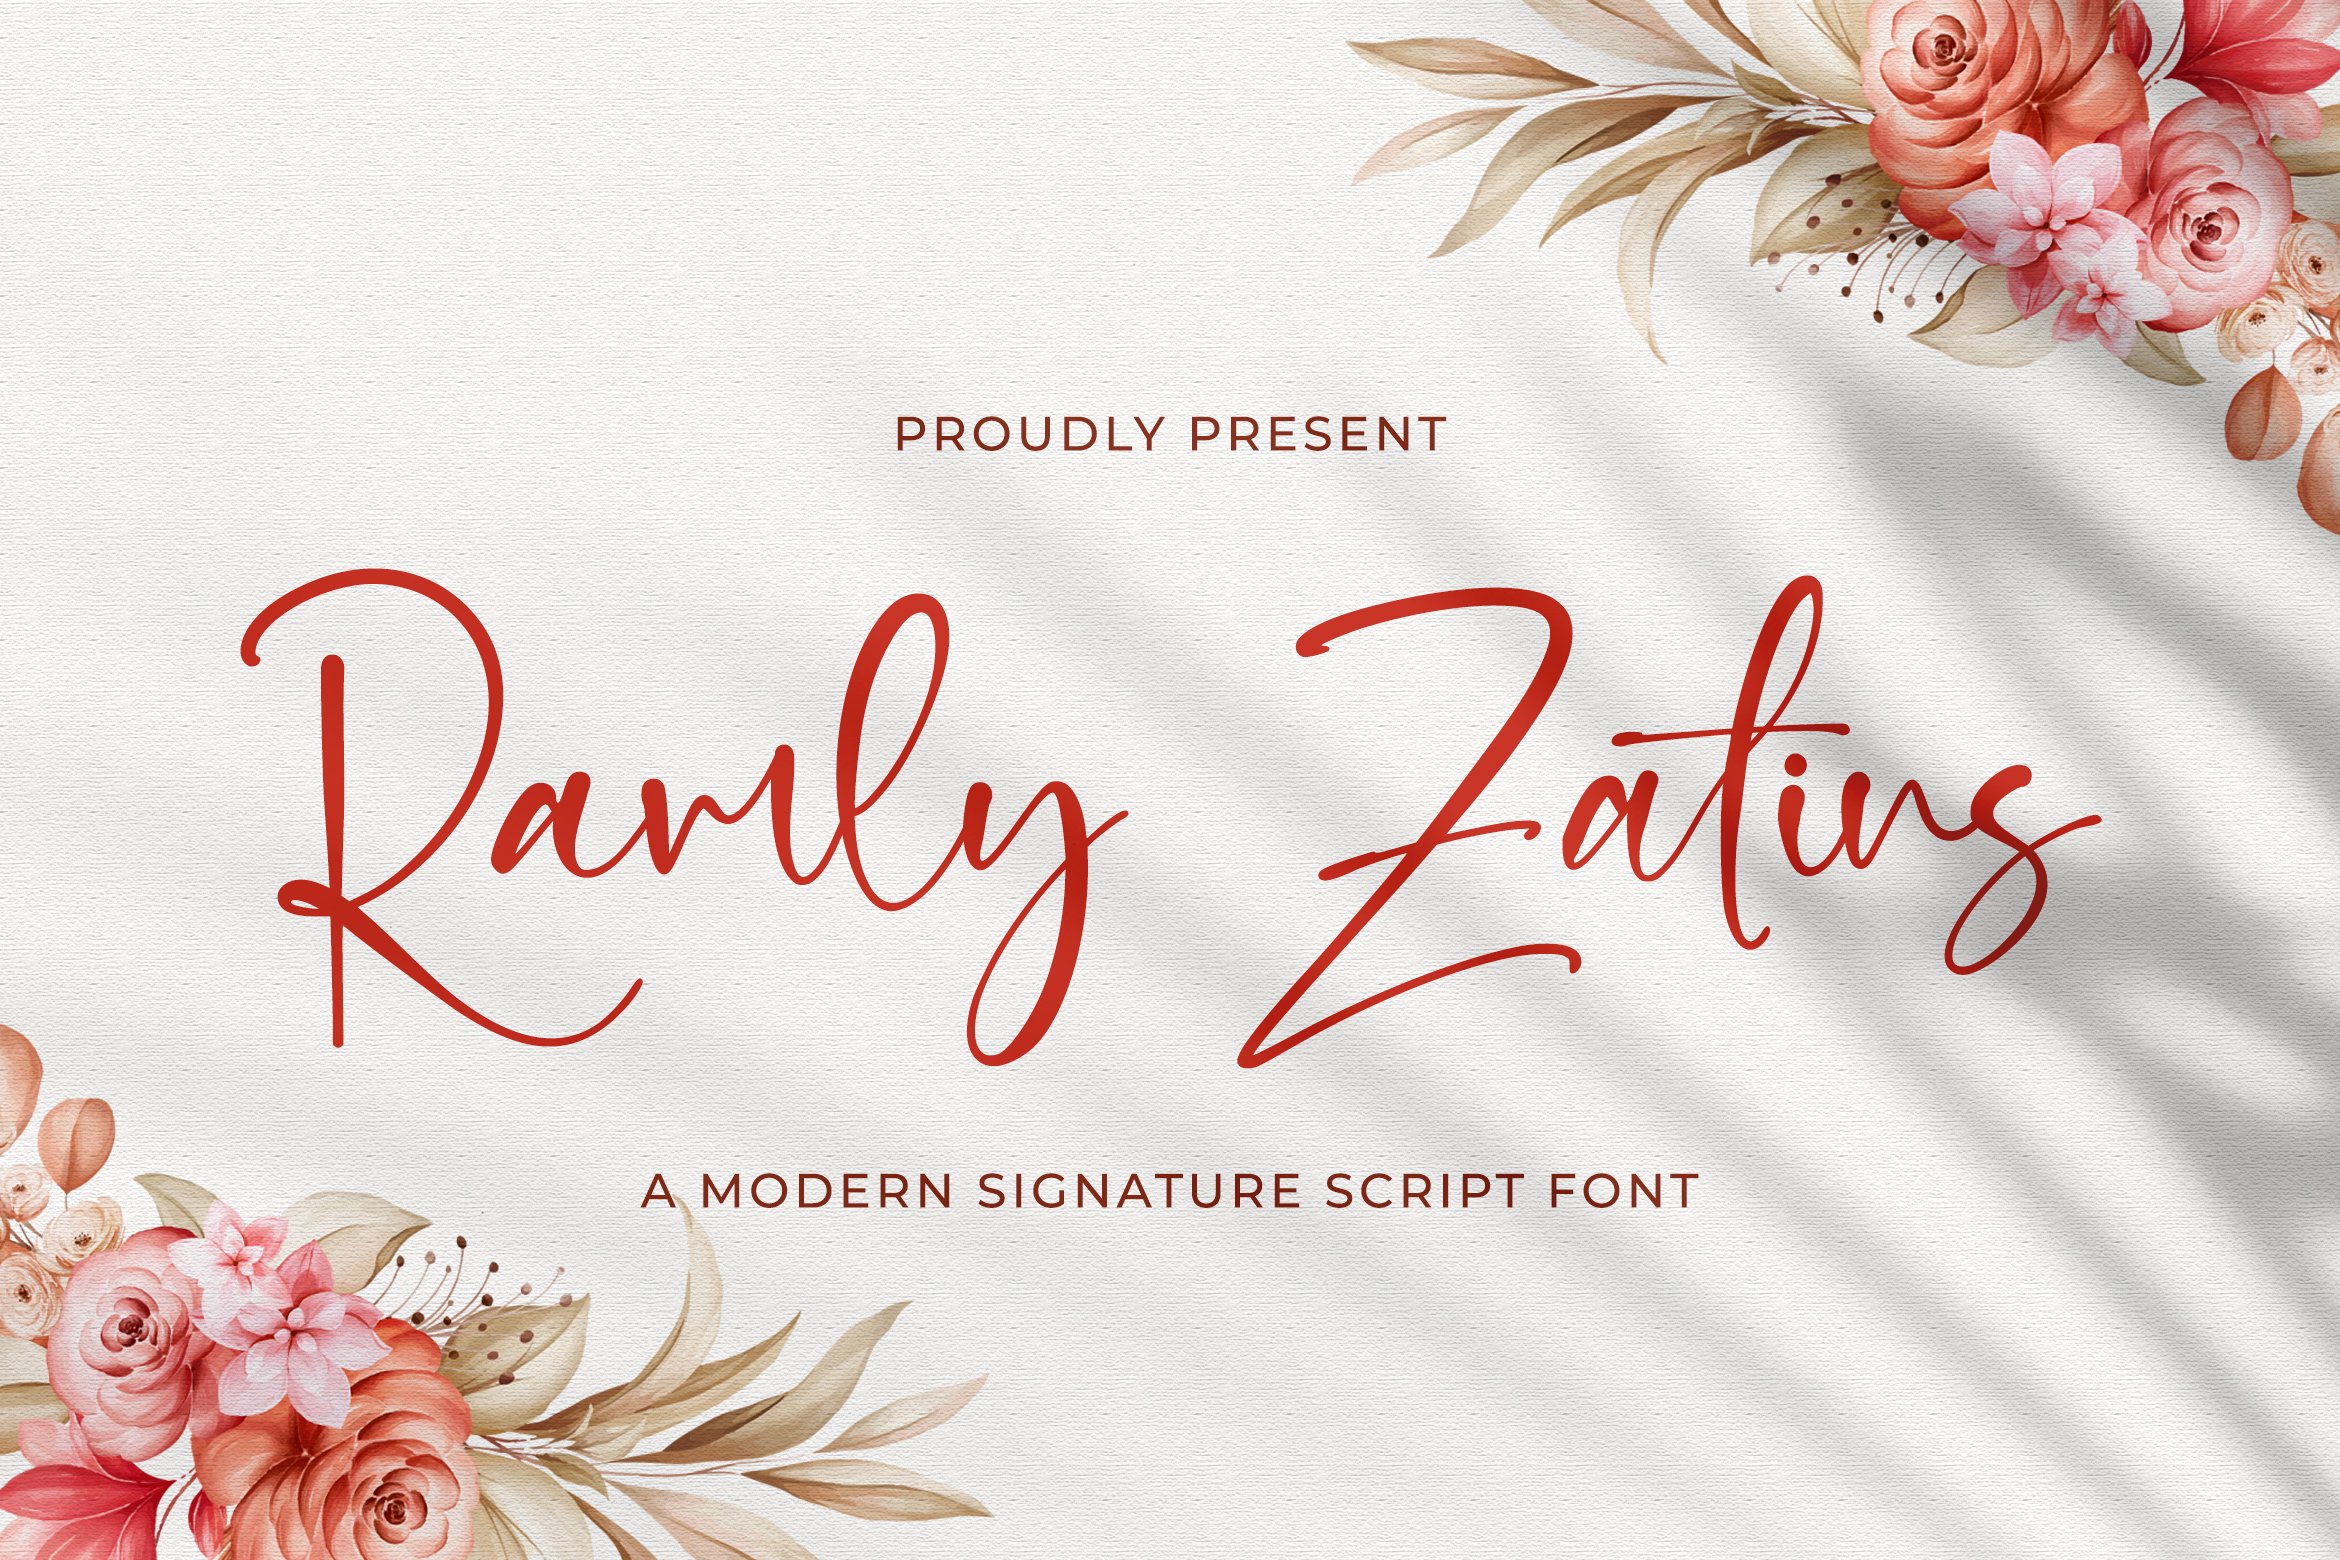 Ramly Zatins - Signature Script Font cover image.